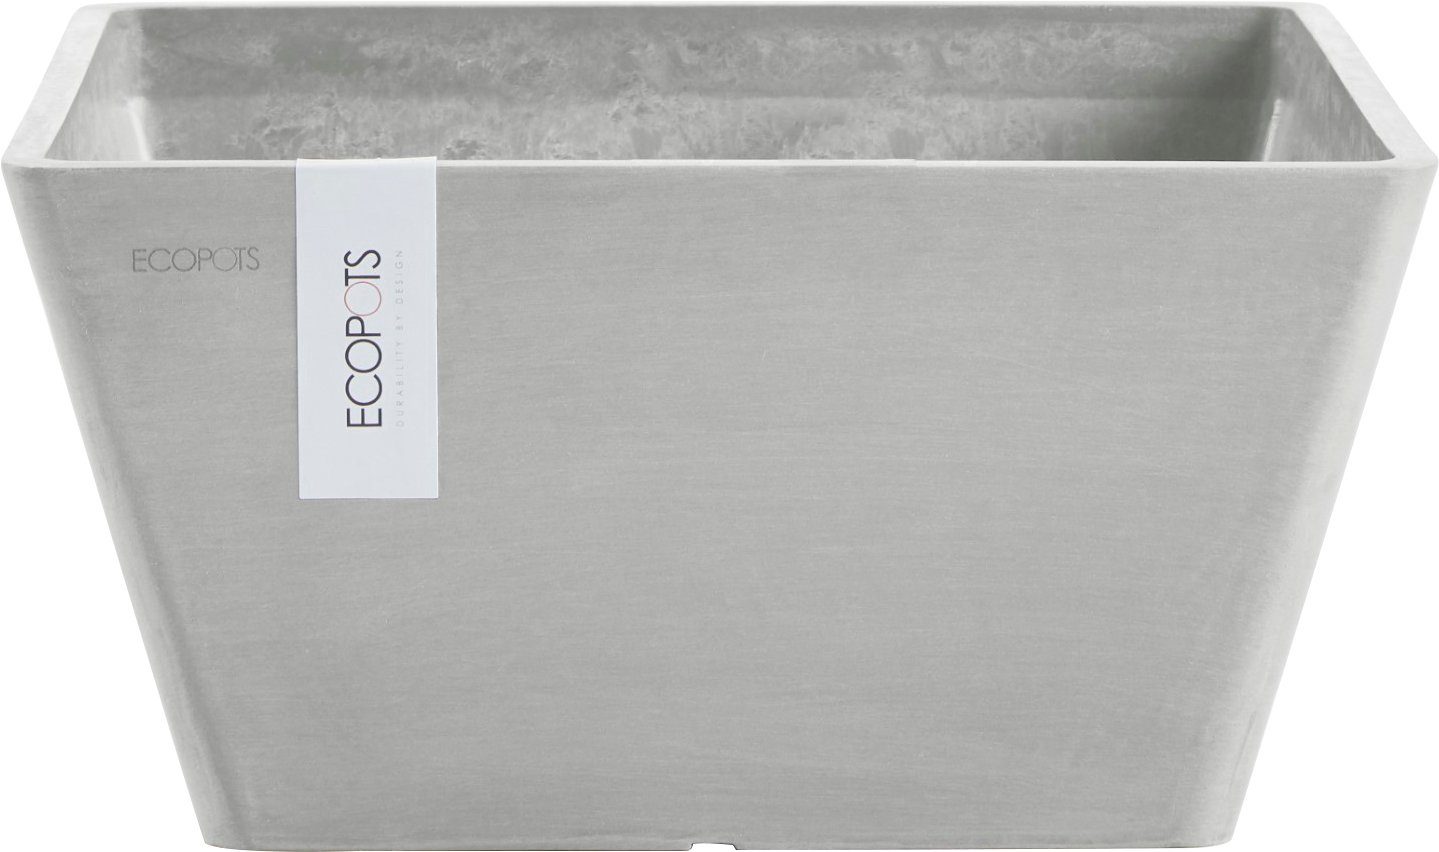 ECOPOTS Blumentopf BERLIN Grey, 31x31x15,5 cm BxTxH: White